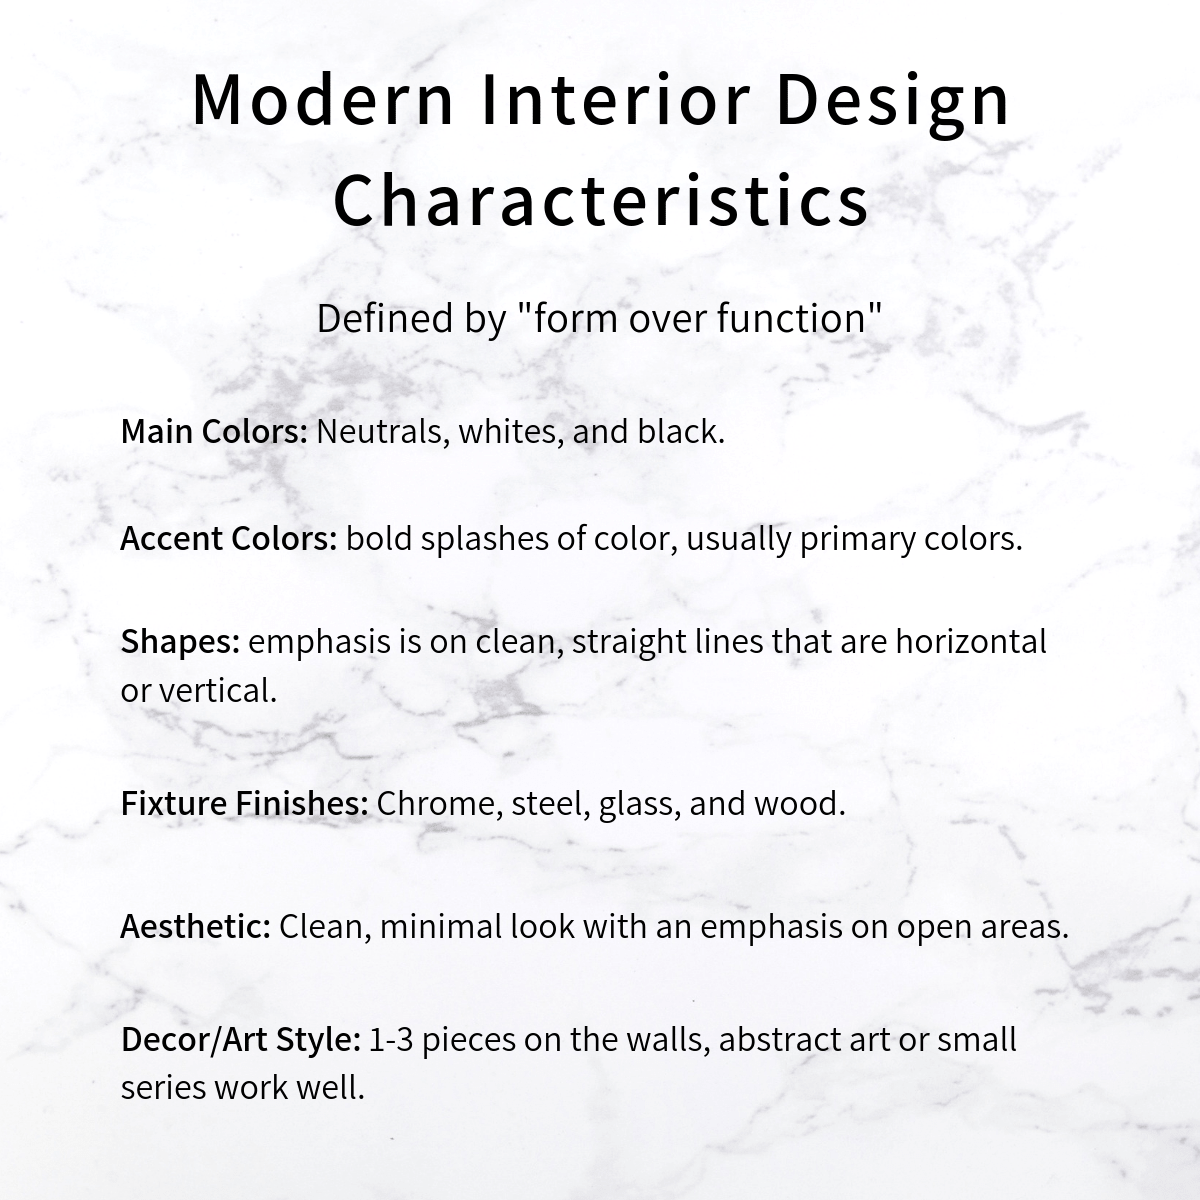 Modern interior design characteristics